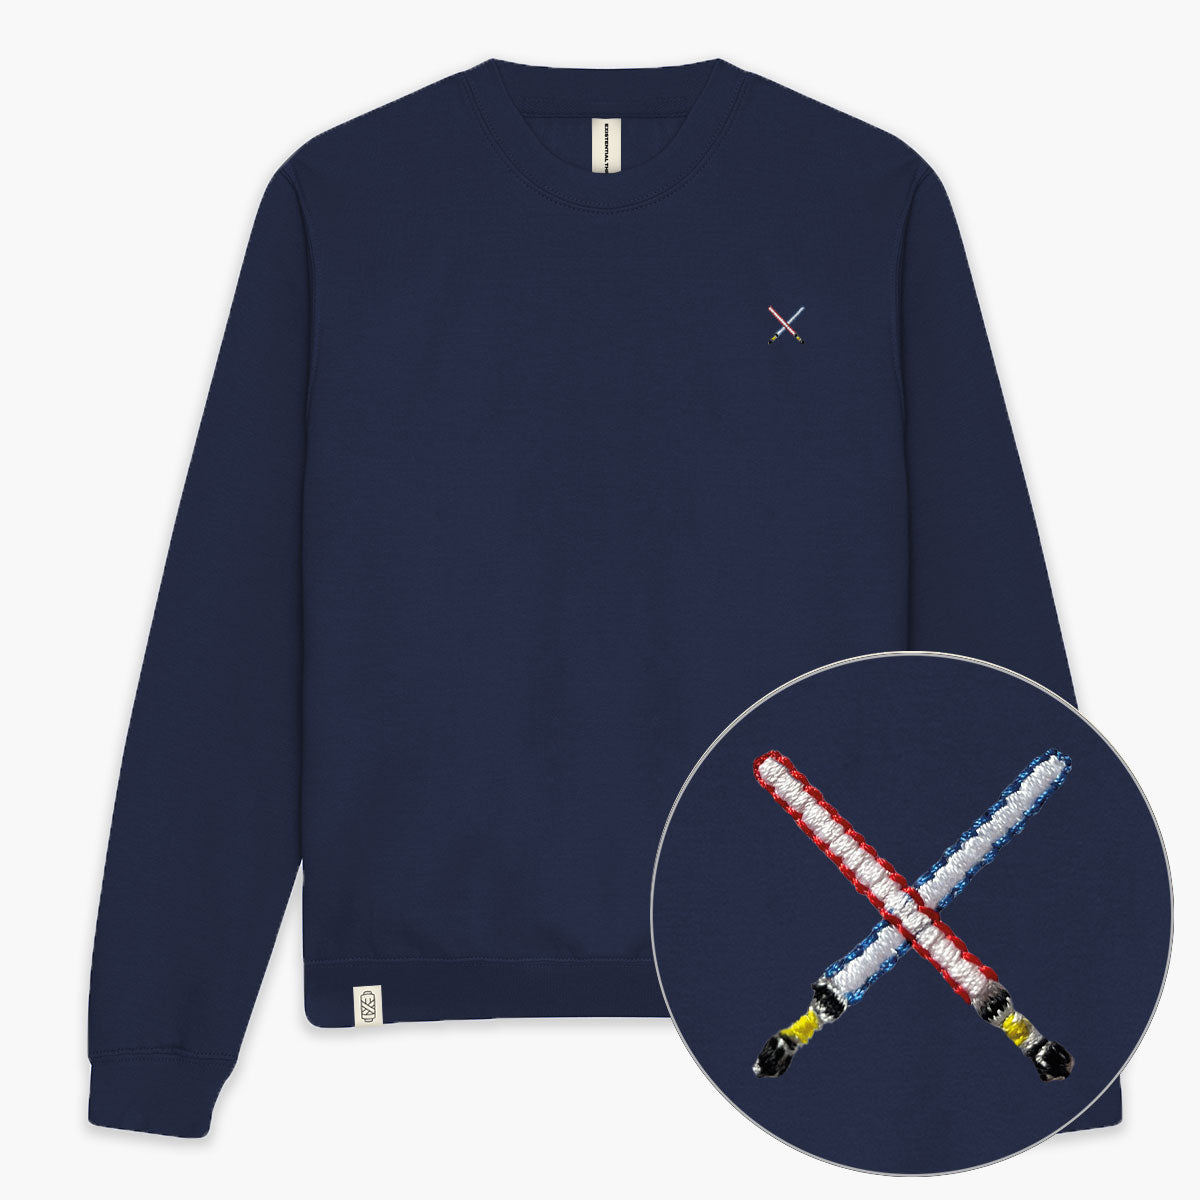 Intergalactic Swords Embroidered Sweatshirt (Unisex)